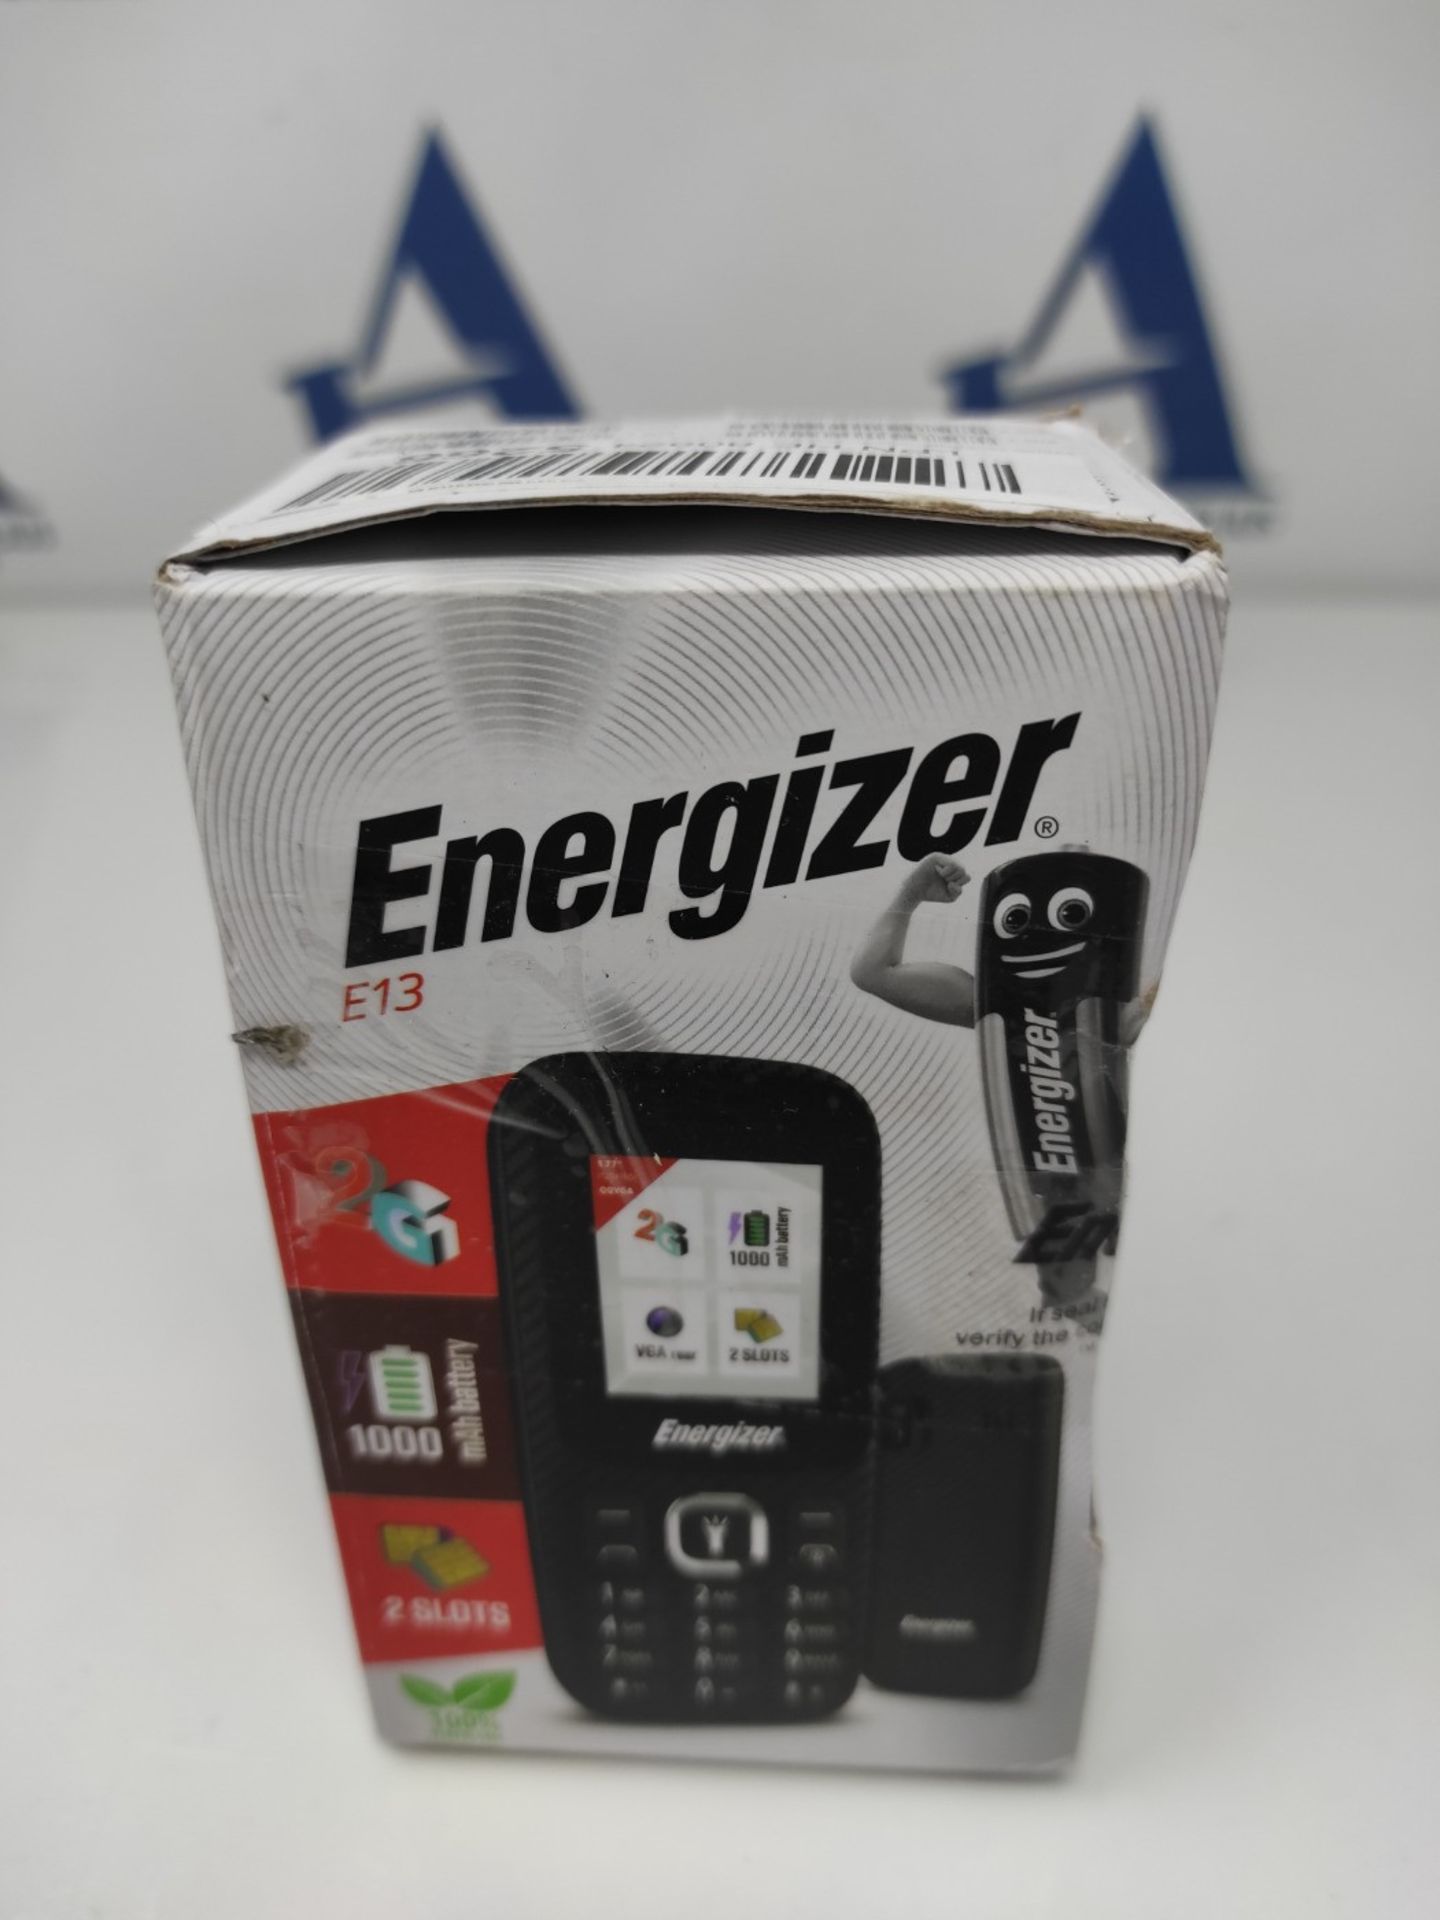 Energizer - Mobile E13-2G - Dual Sim Mobile Phone - Black - Mini SIM - Unlocked - Torc - Image 2 of 3